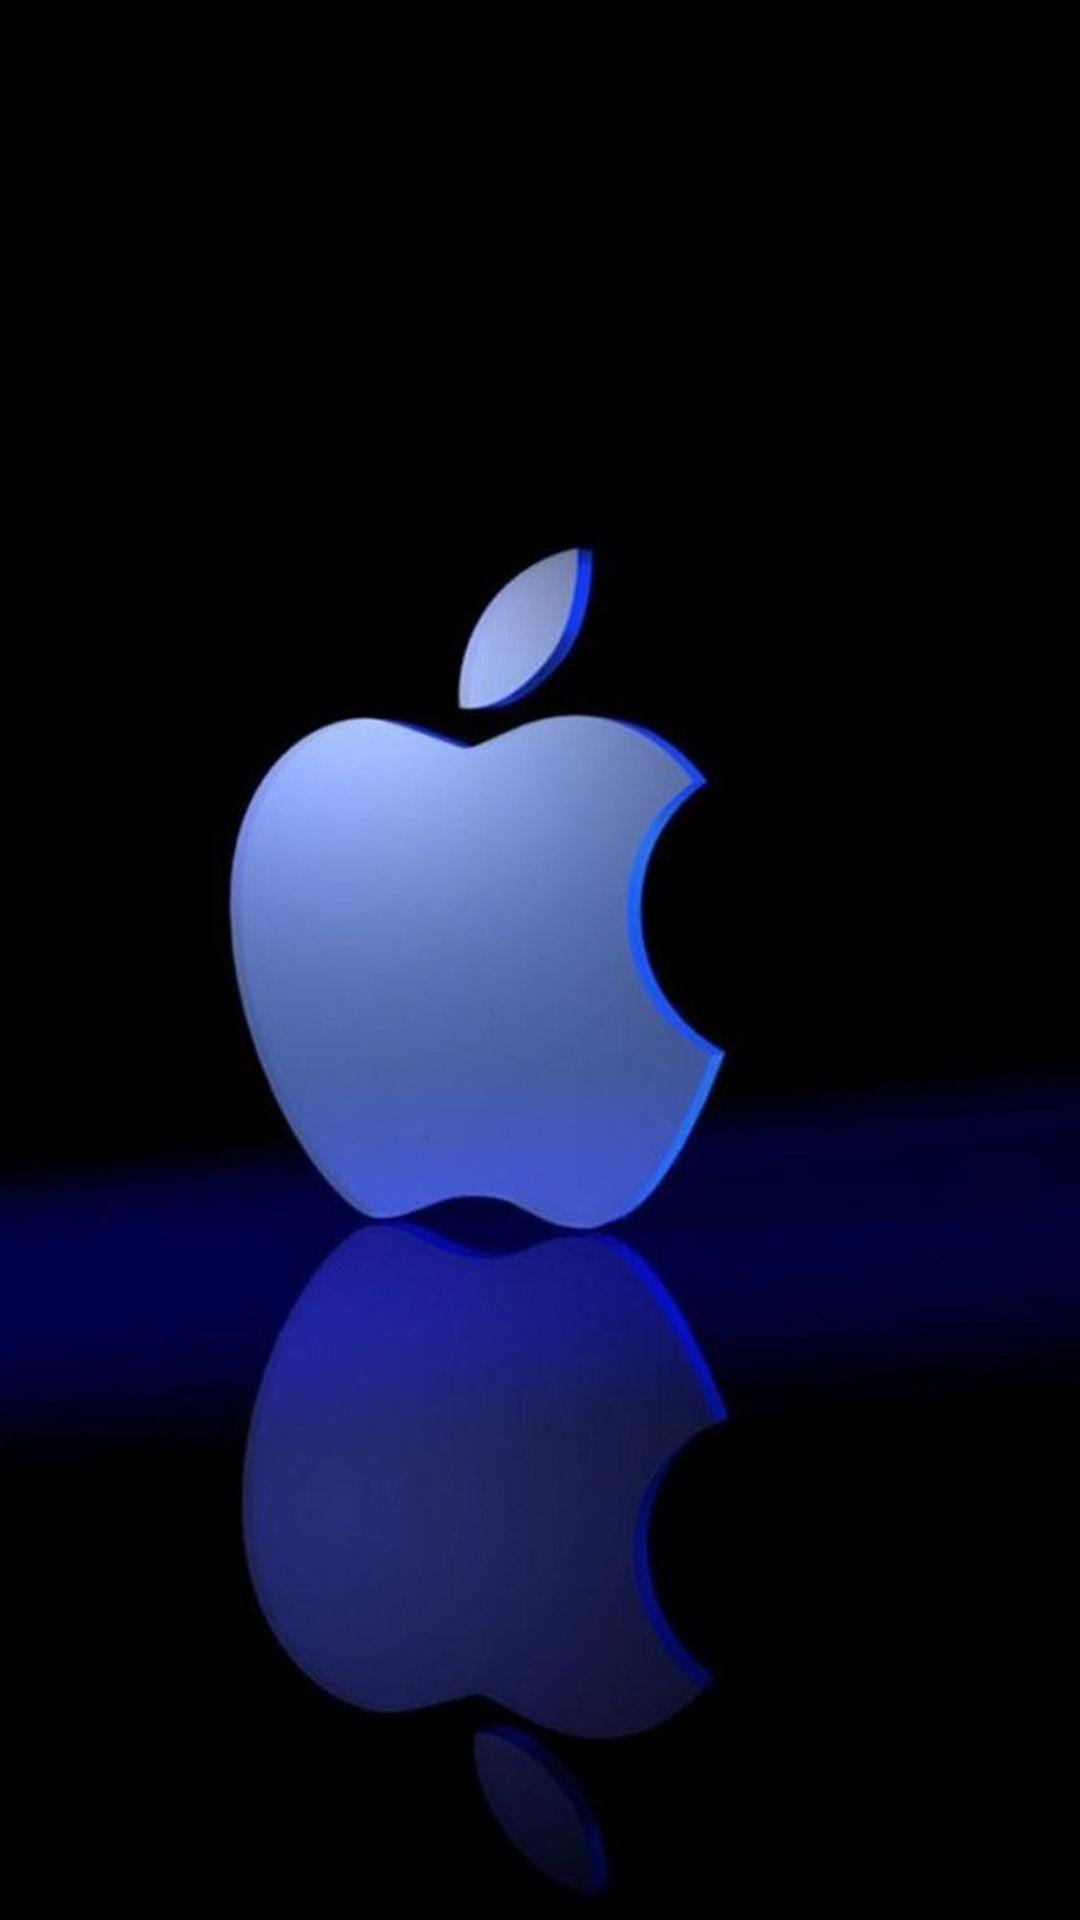 Apple iPhone Logo HD Wallpapers - Wallpaper Cave